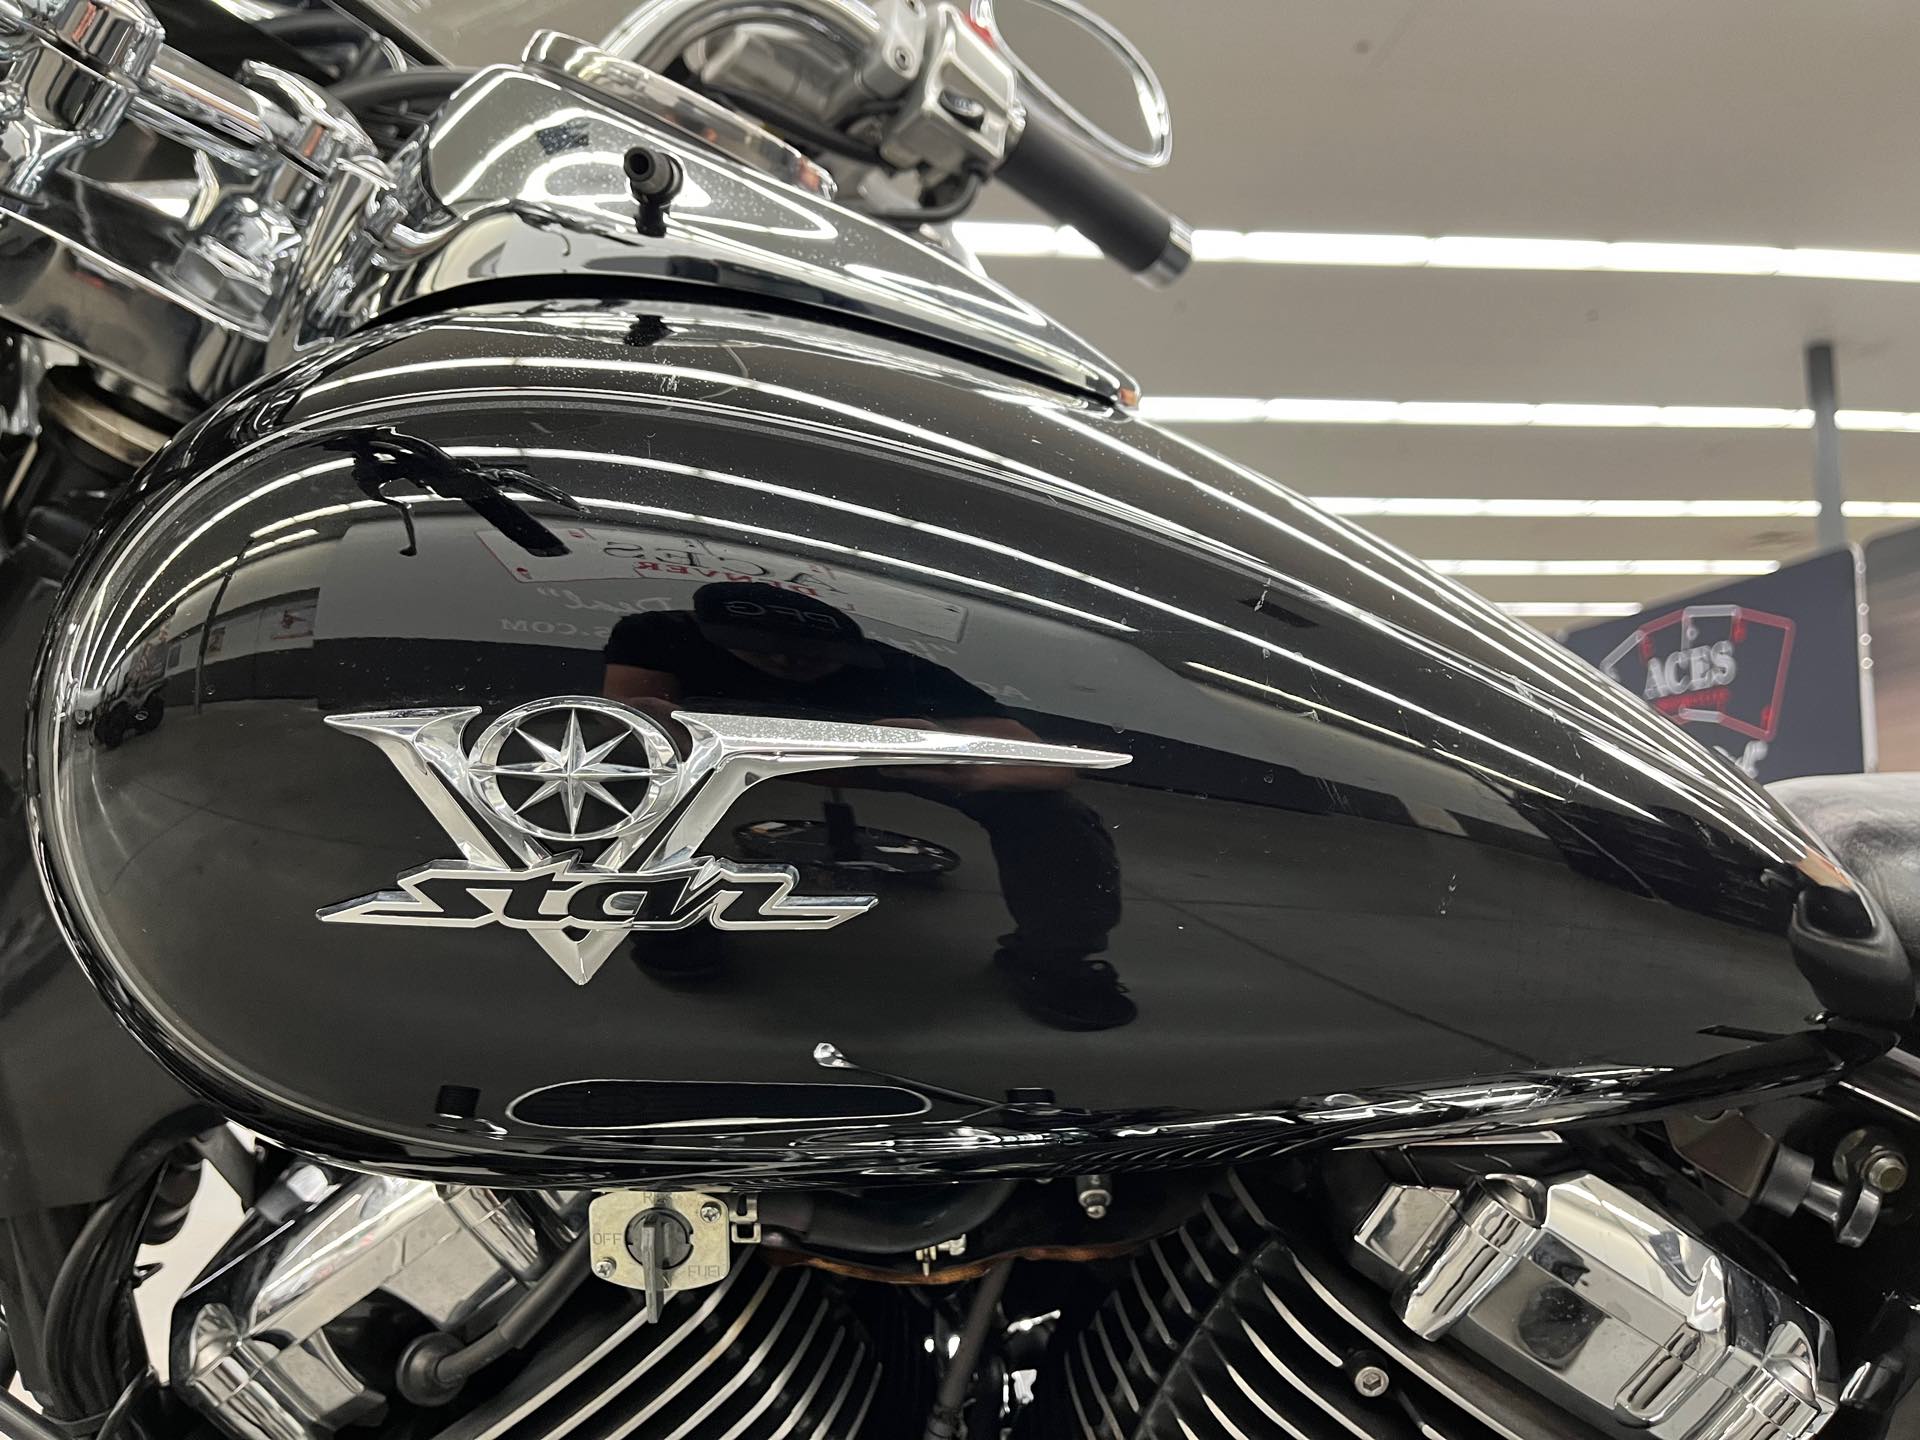 2007 Yamaha V Star Custom at Aces Motorcycles - Denver